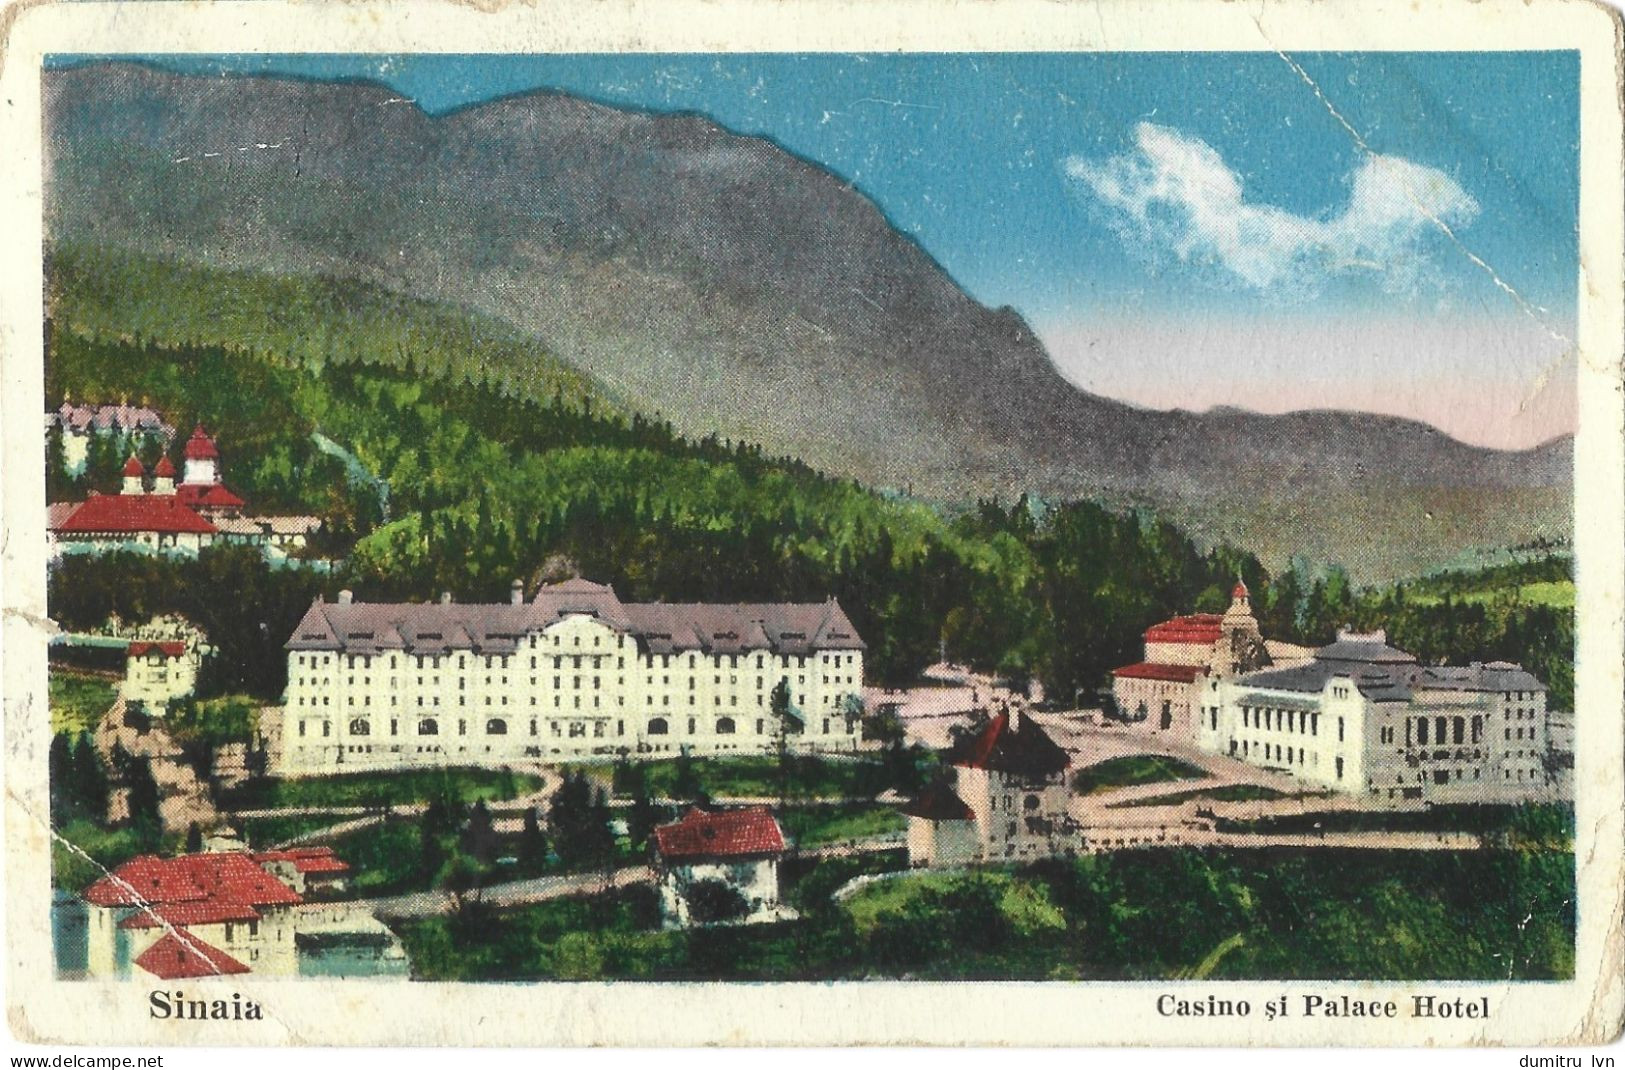 ROMANIA 1935 SINAIA - THE CASINO AND PALACE HOTEL, BUILDINGS, ARCHITECTURE, MOUNTAIN LANDSCAPE - Roumanie